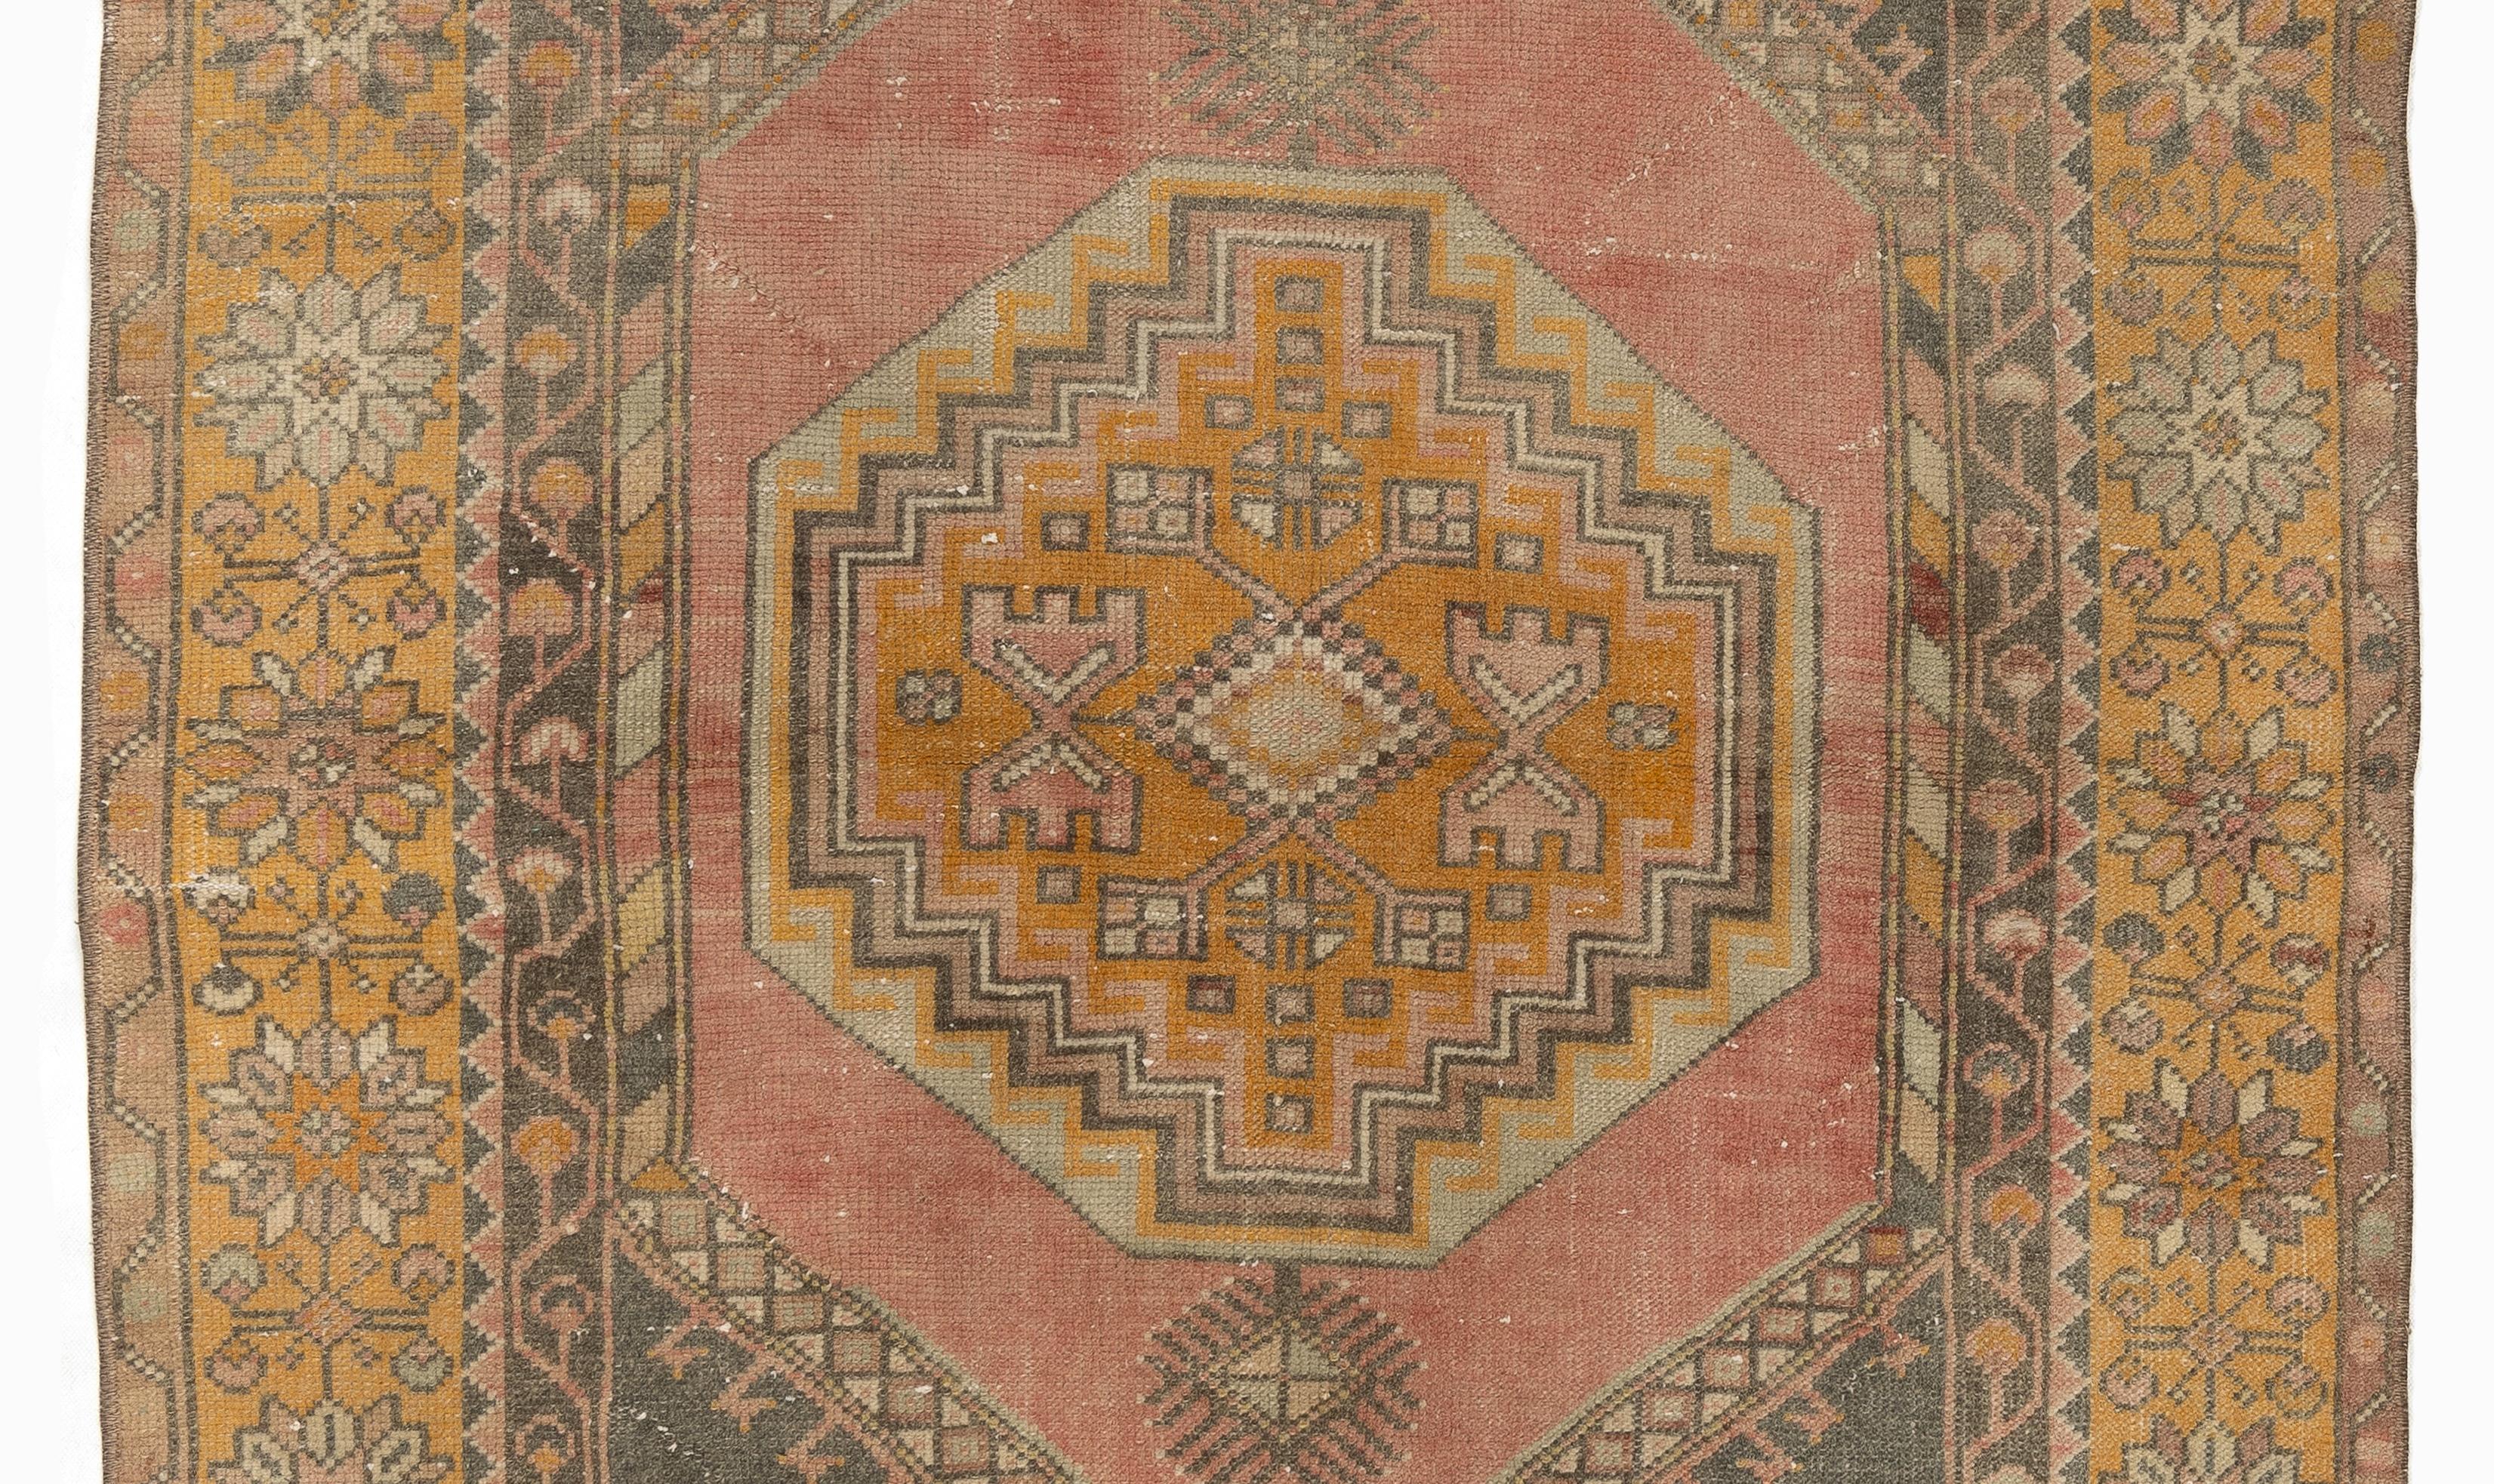 Tribal Tapis anatolien artisanal, tapis en laine vintage multicolore de style tribal en vente